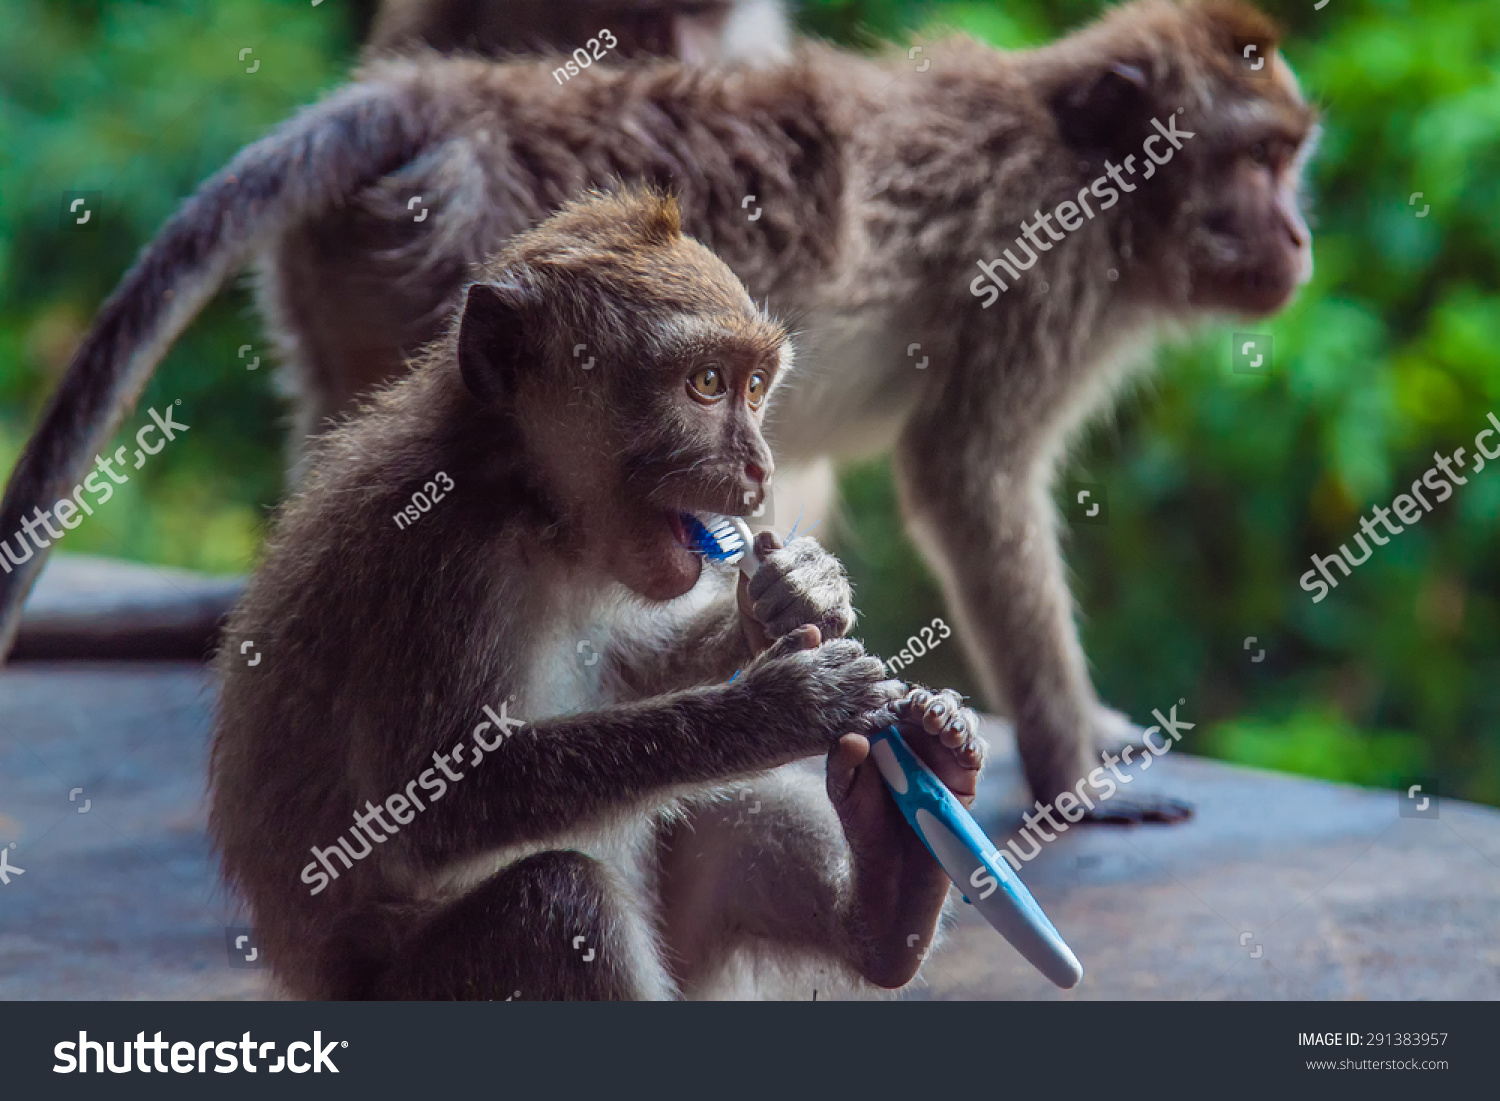 monkey toothbrush